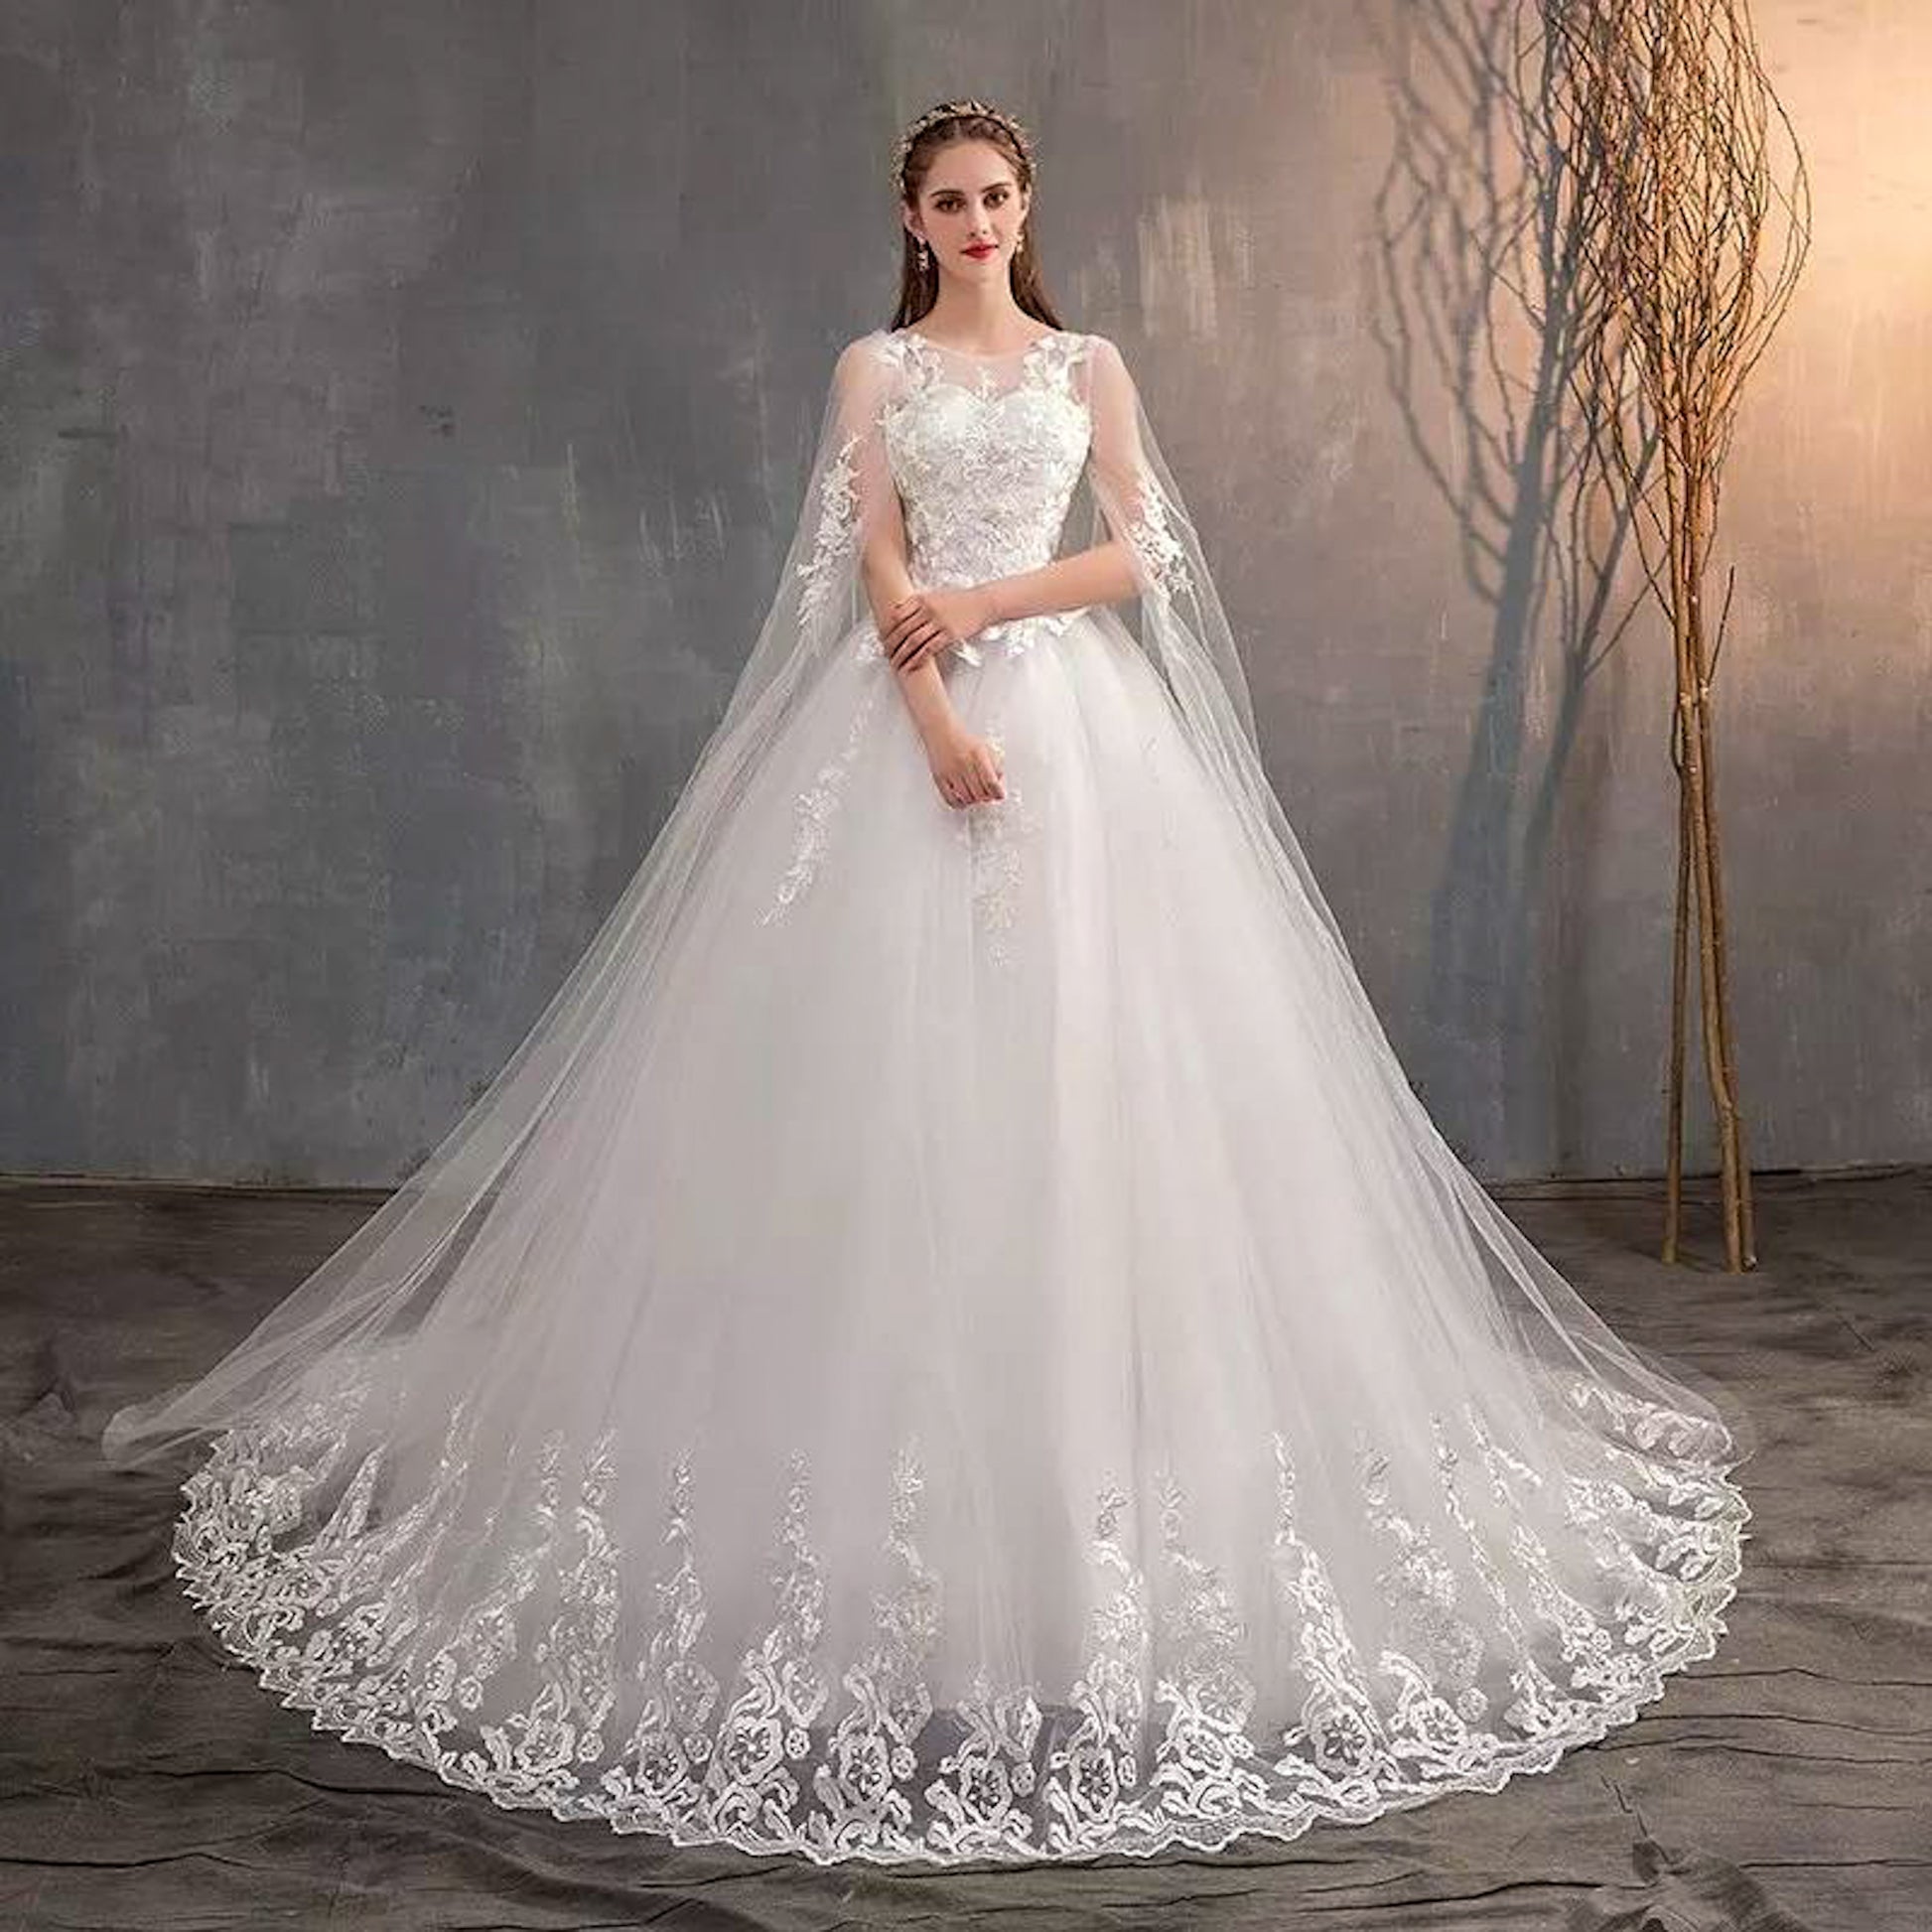 The Ensa Wedding dress | Best Seller! – The ENSA